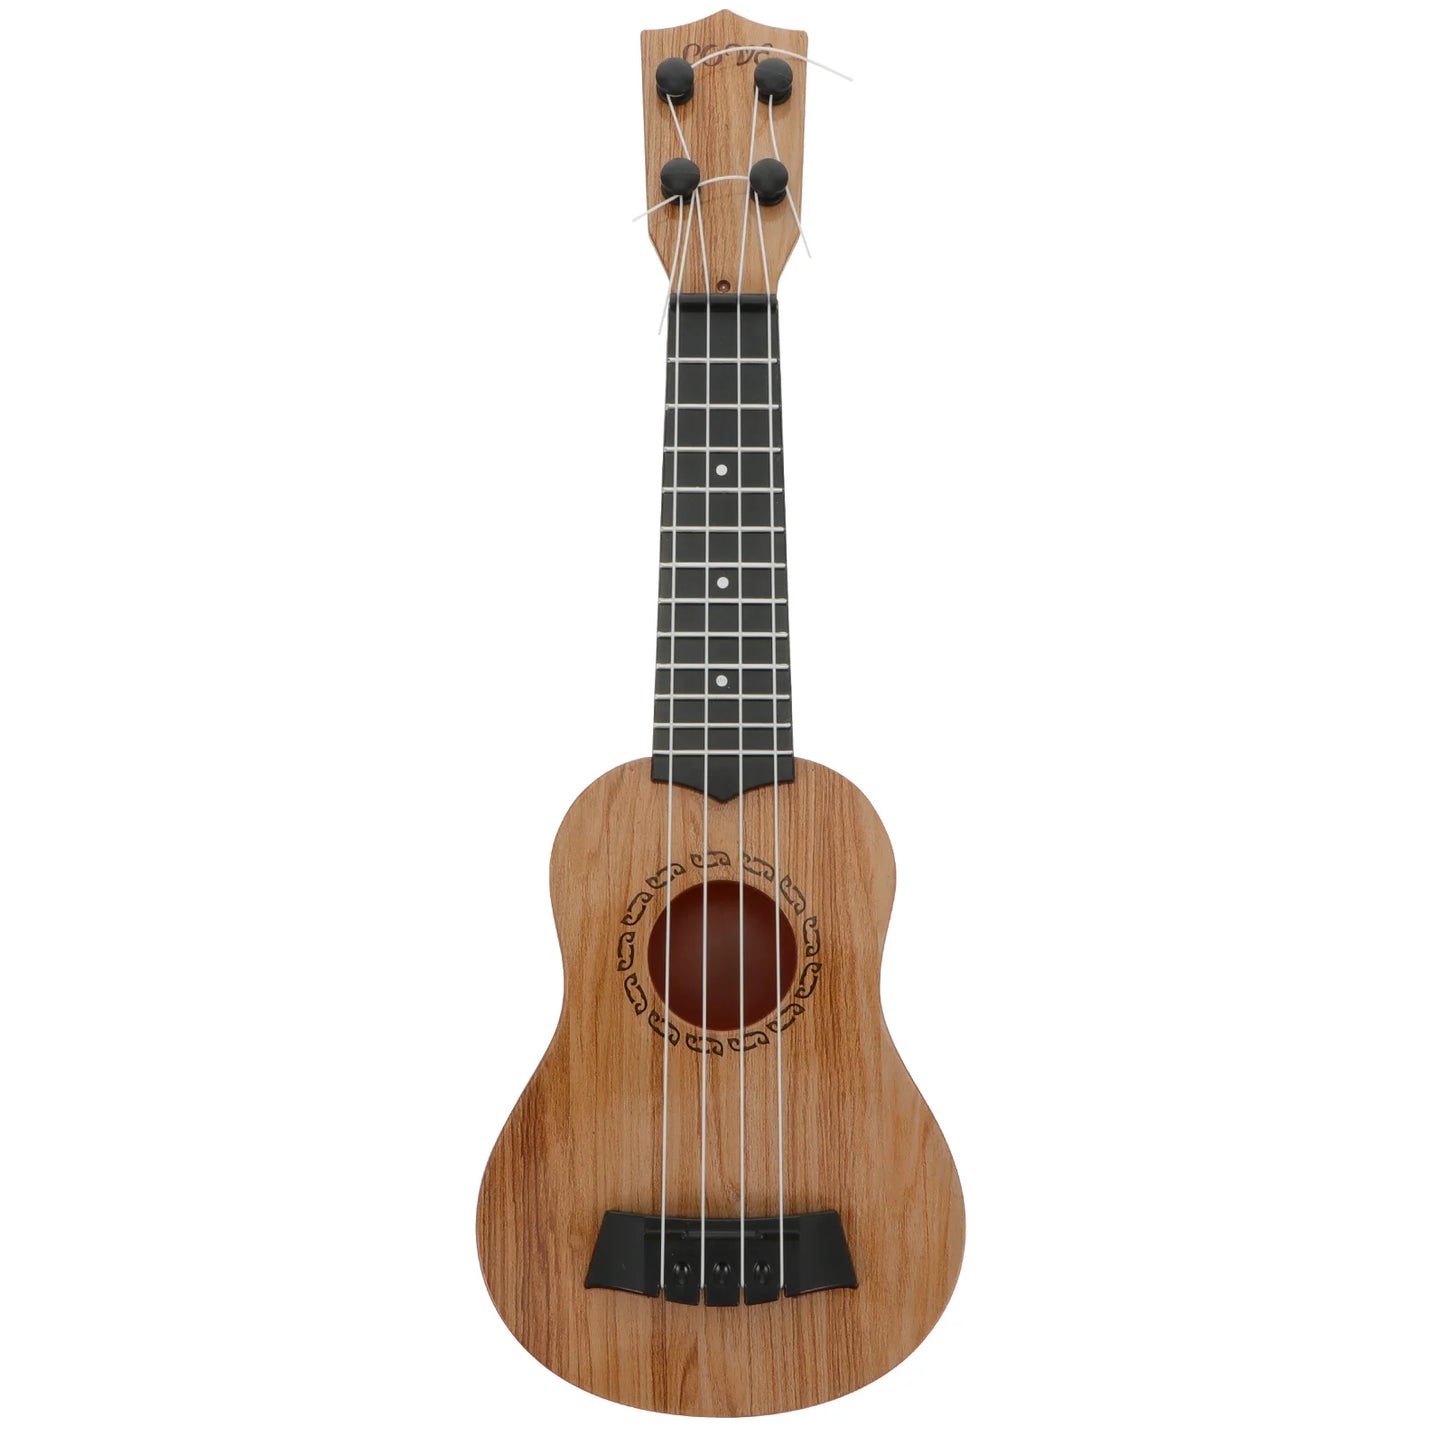 Ukulele Musical Guitar for Kids classical Instrument